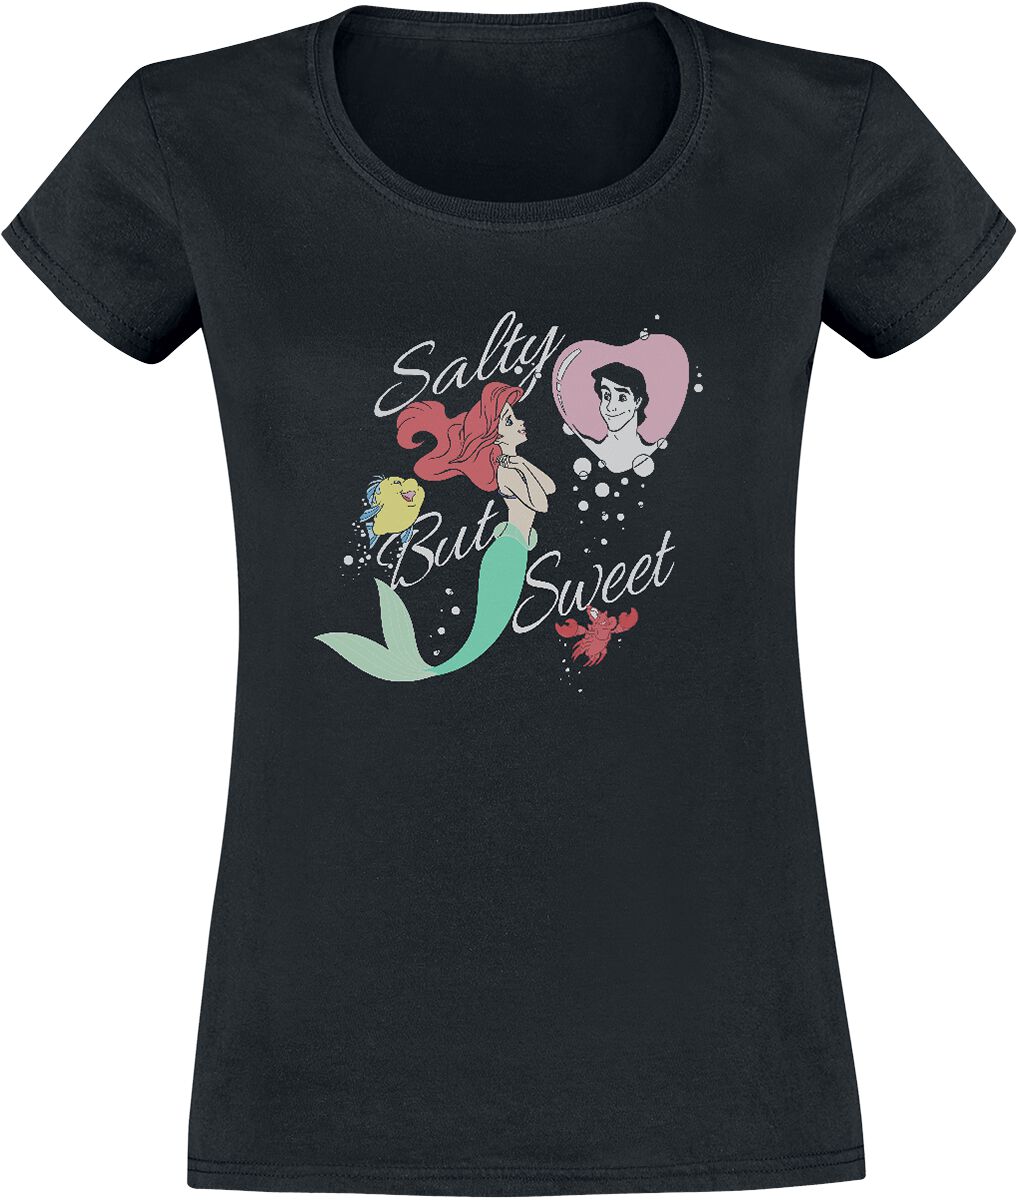 The Little Mermaid Salty But Sweet T-Shirt black